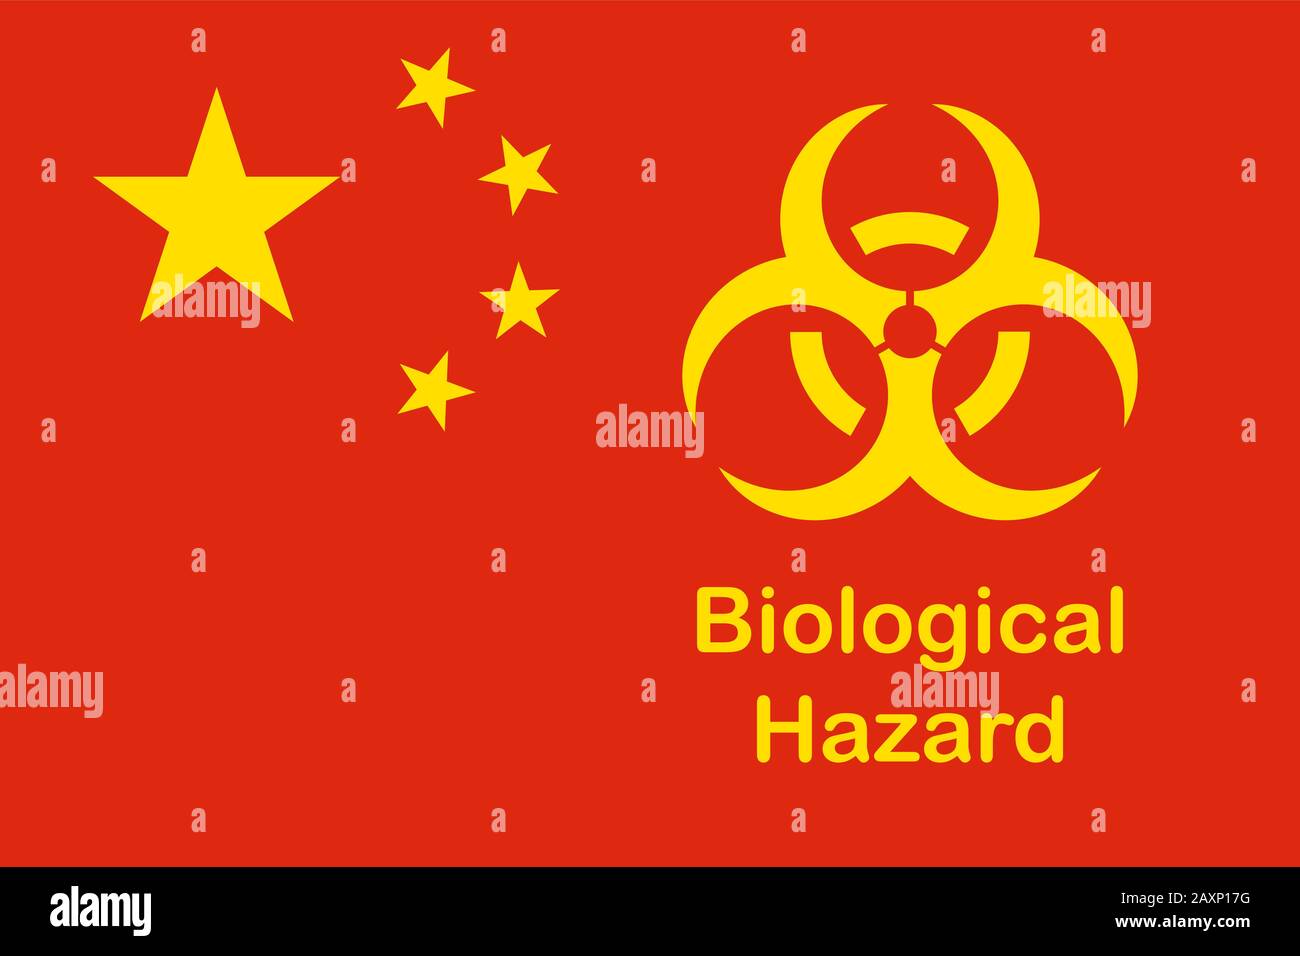 Biological Hazard, Coronavirus, China. Vector illustration, flat design. Stock Vector